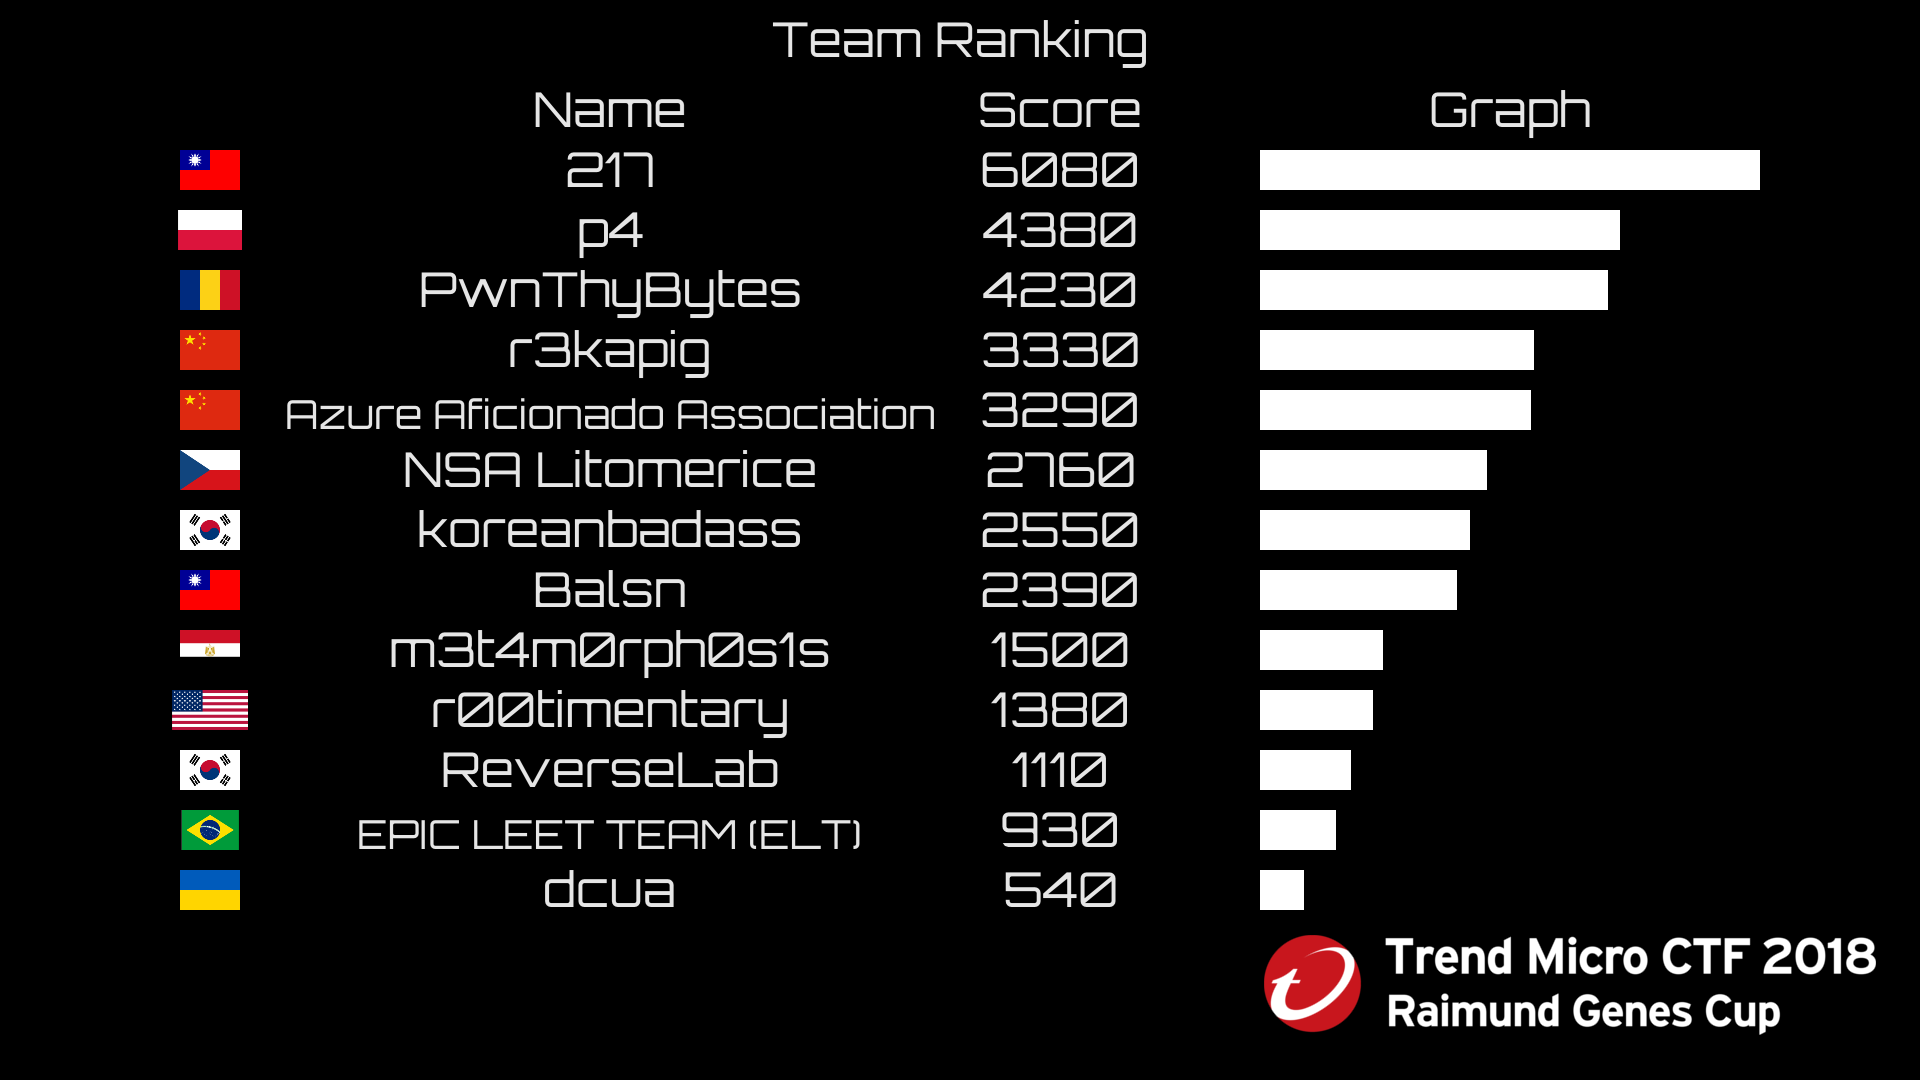 Team Ranking